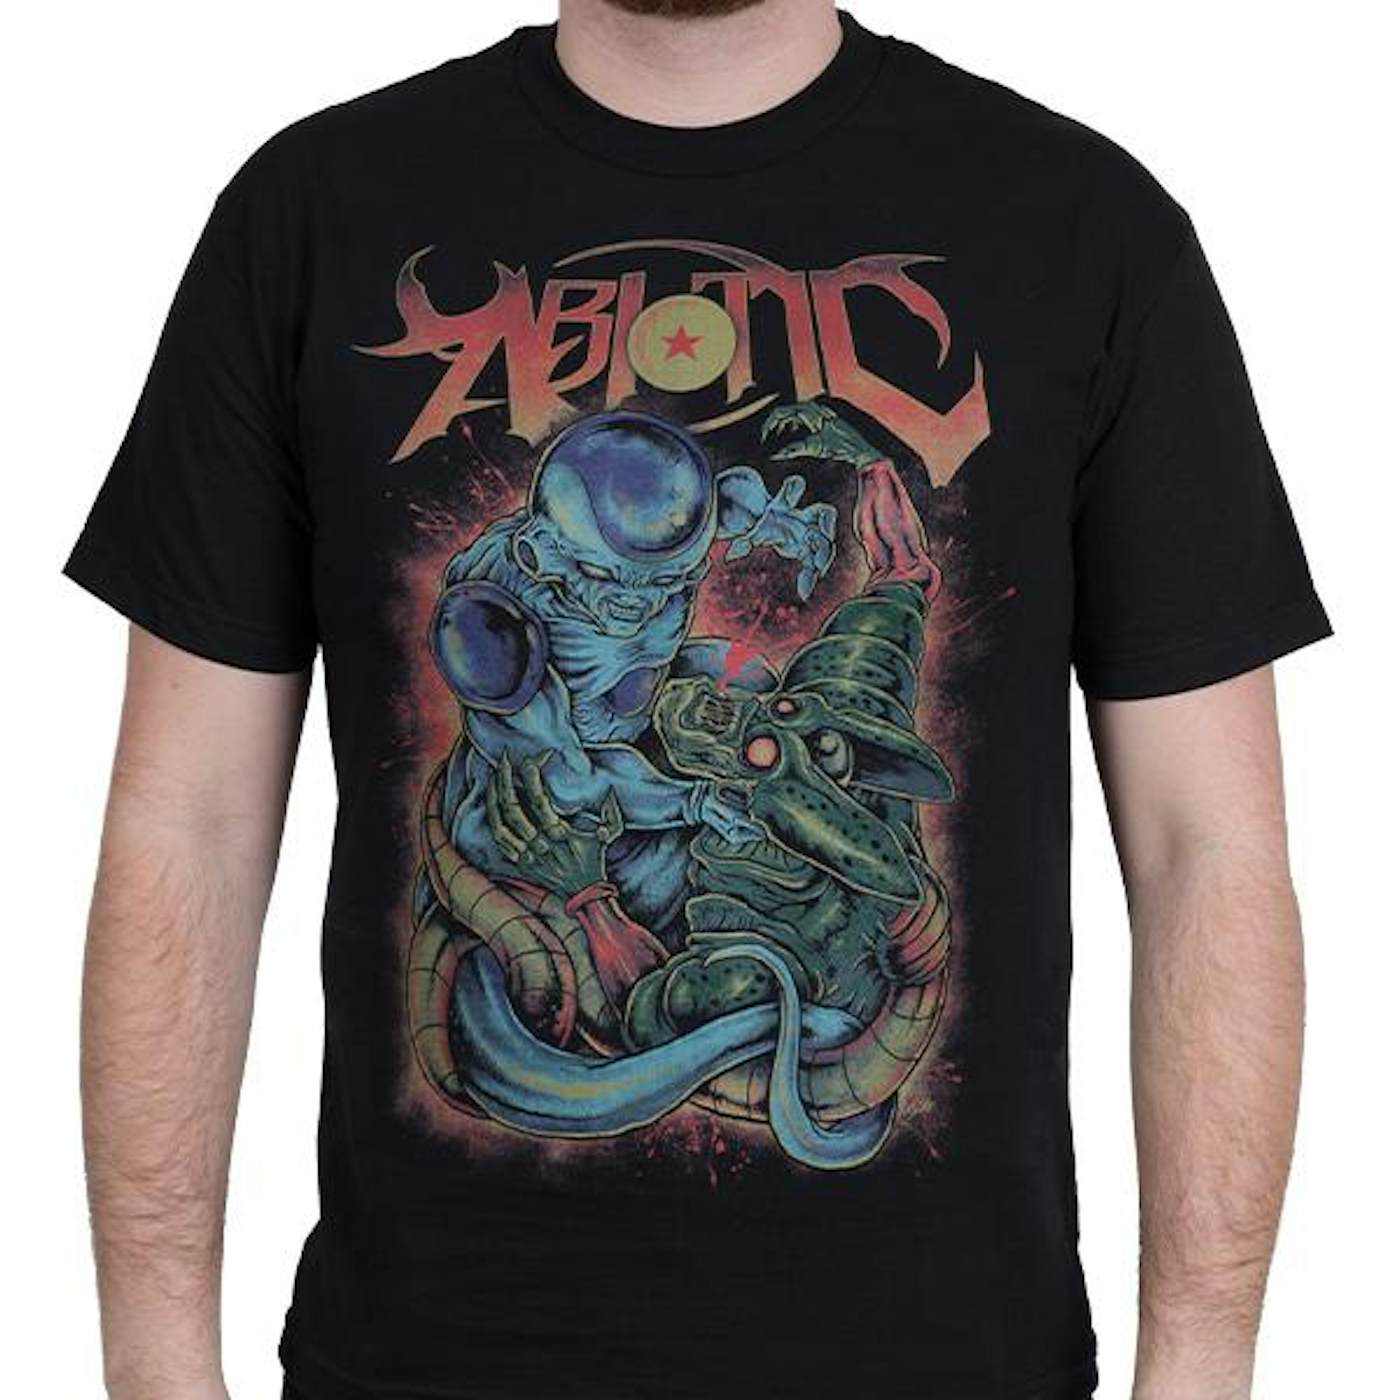 Abiotic "Reviled" T-Shirt